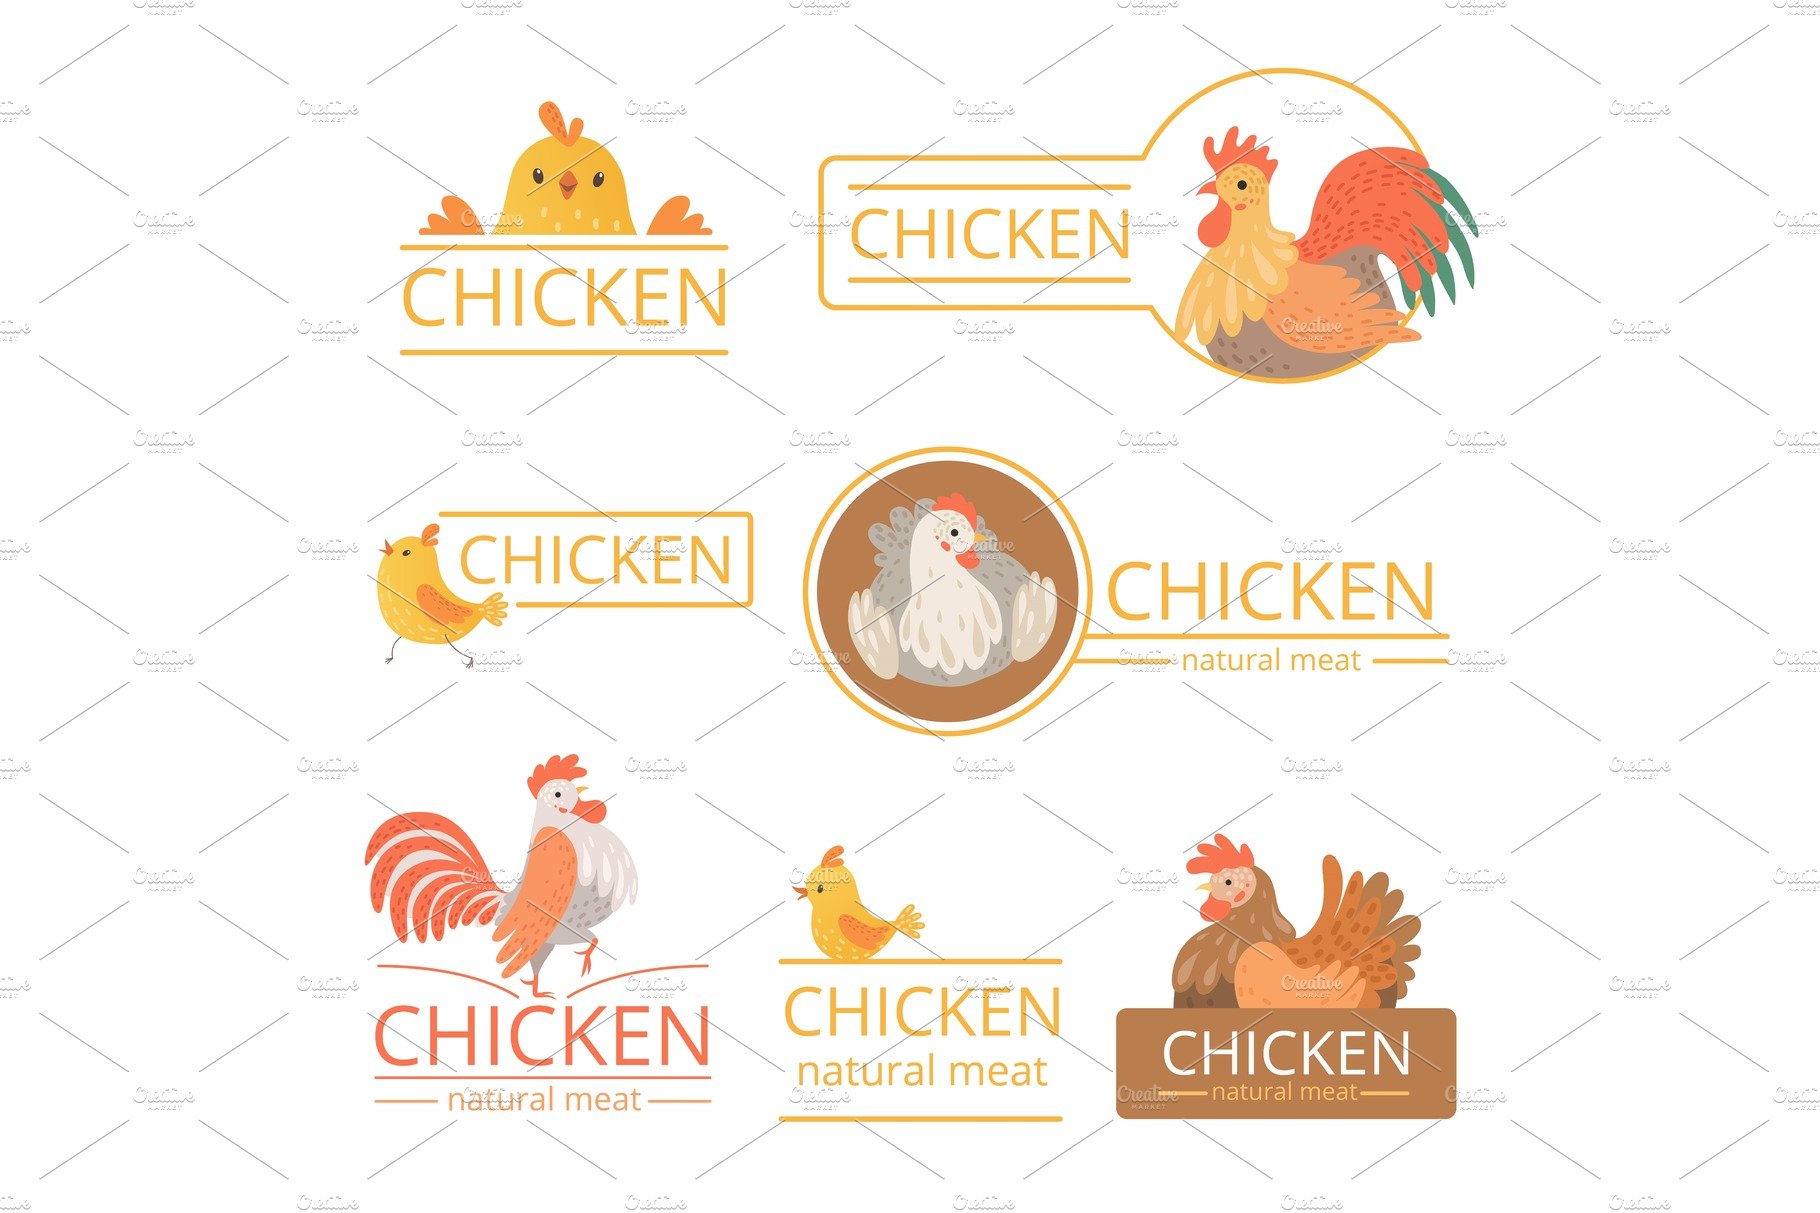 Pollo logo. Chicken illustrations cover image.